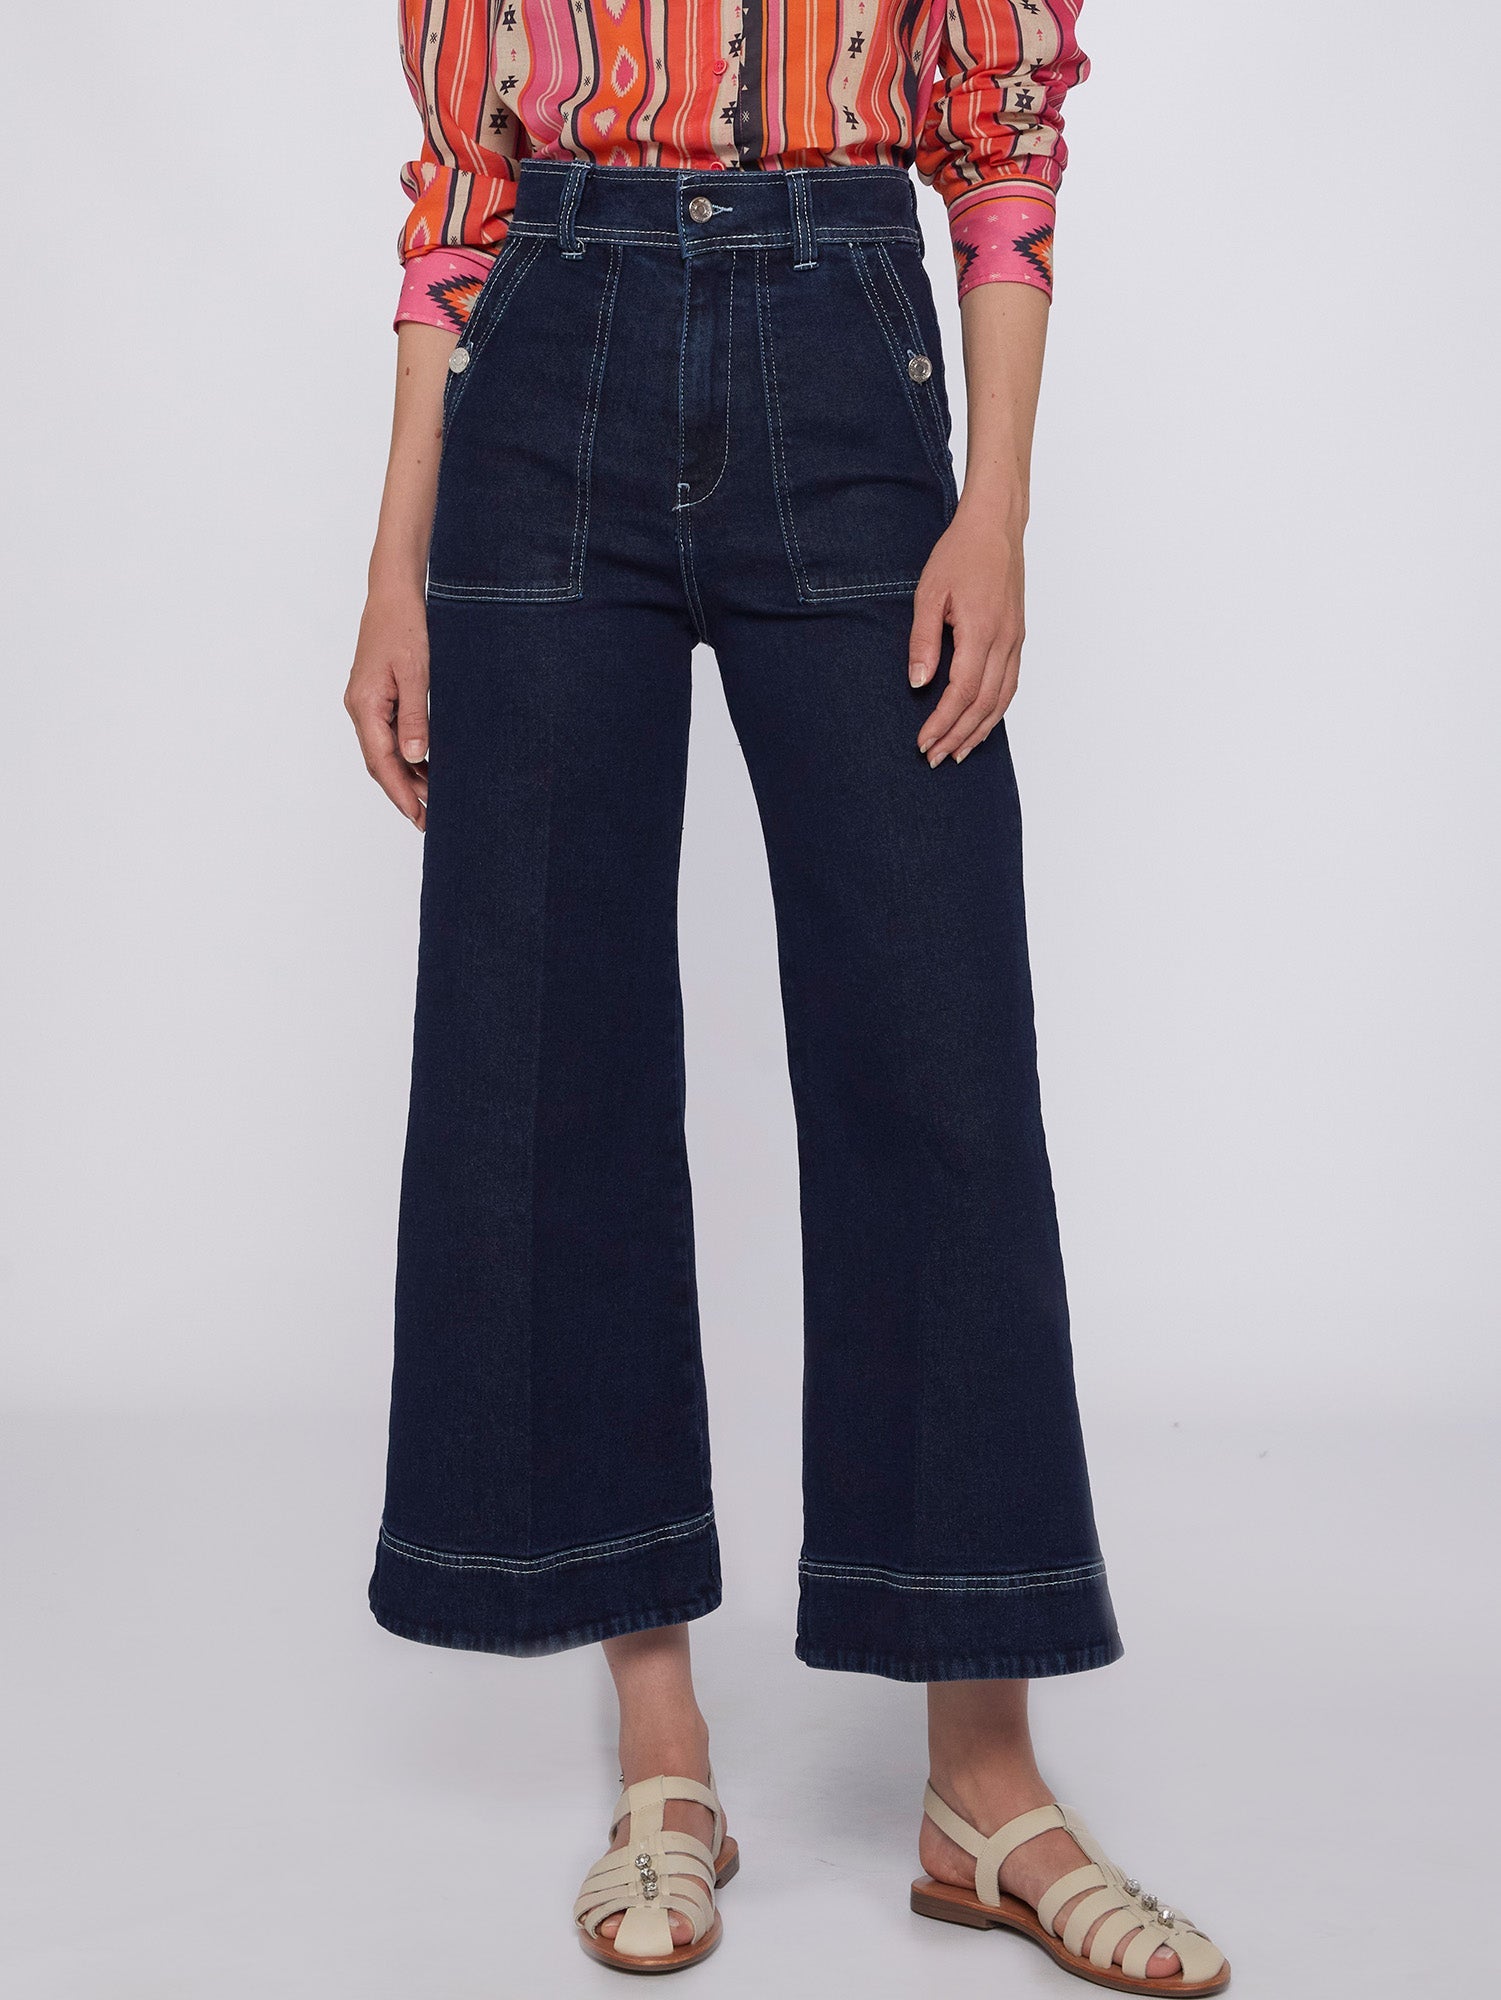 Women's Denim Jeans | MMJs Fashion